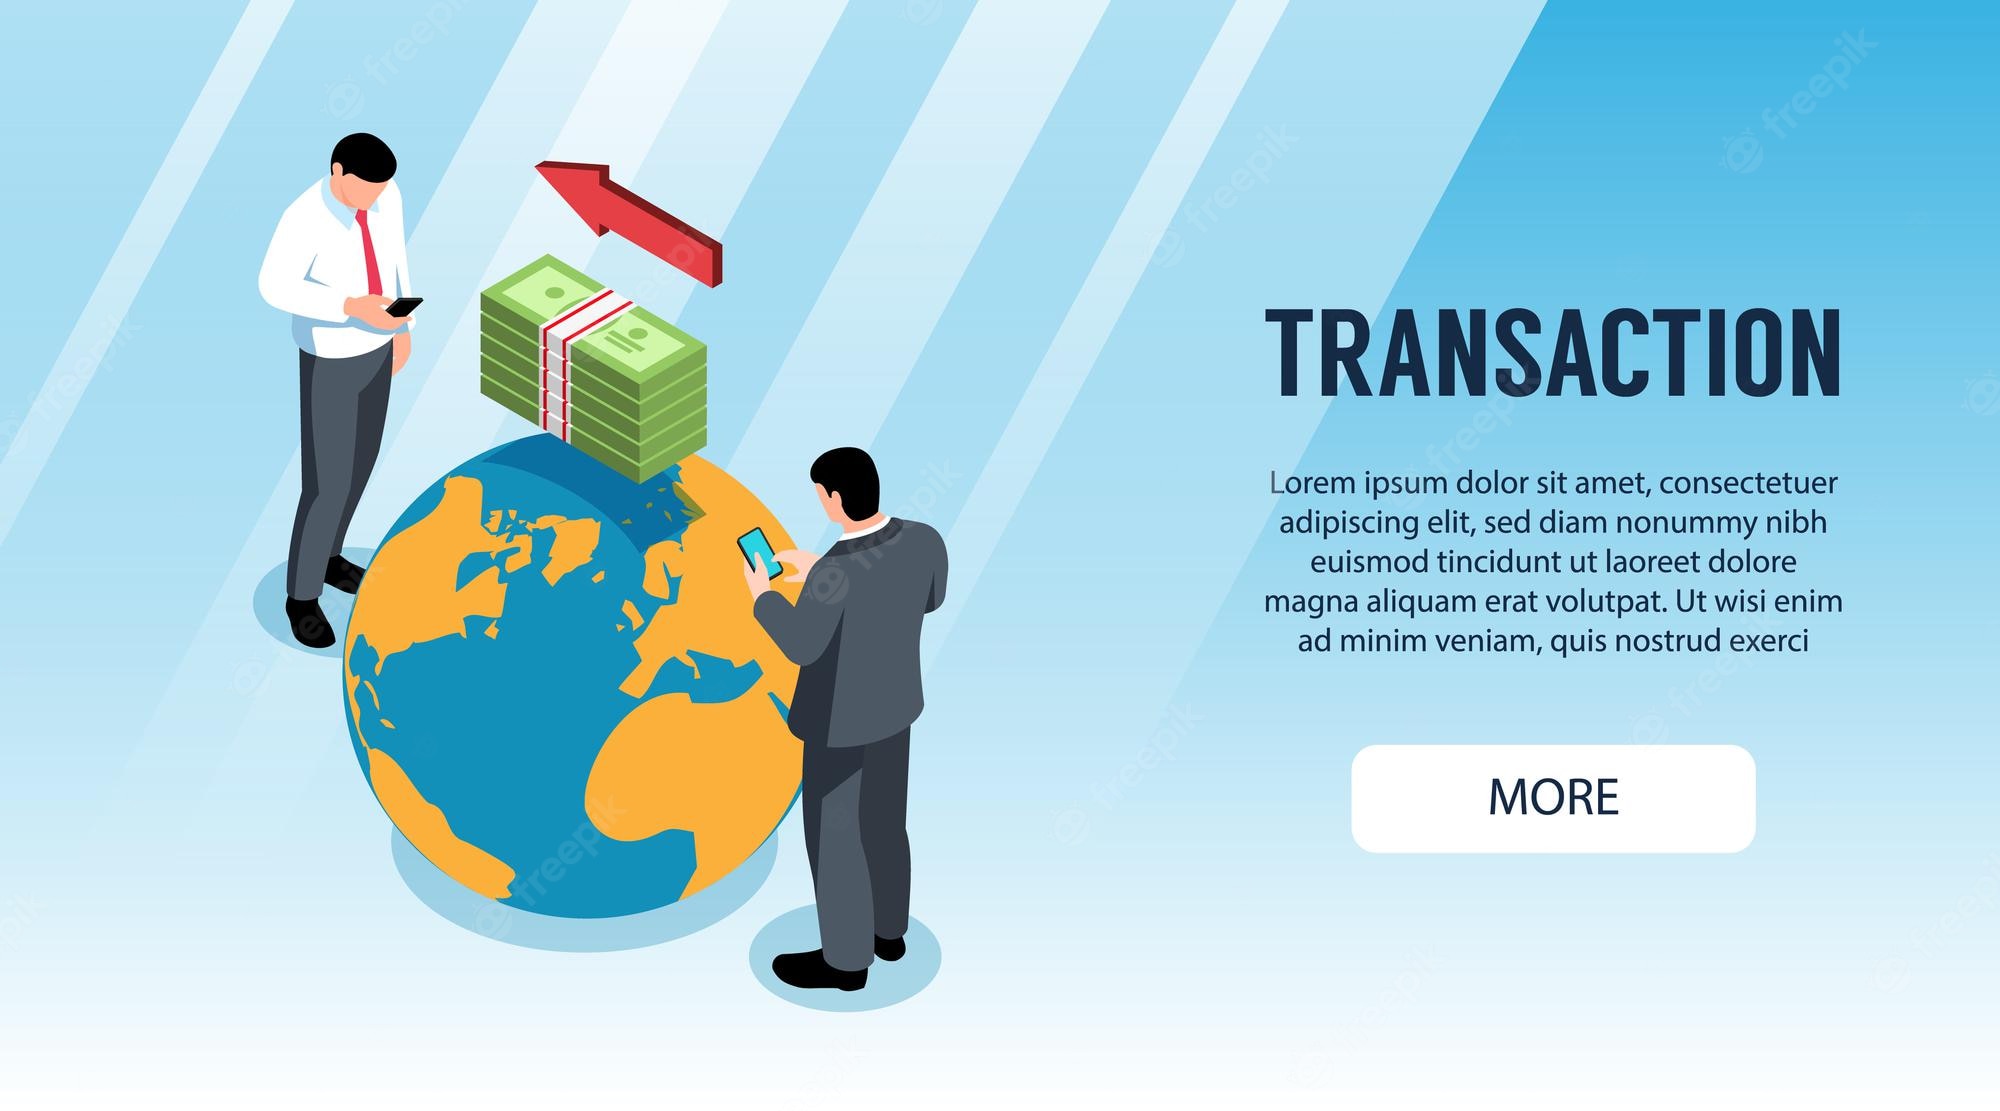 Business Transaction Image. Free Vectors, & PSD